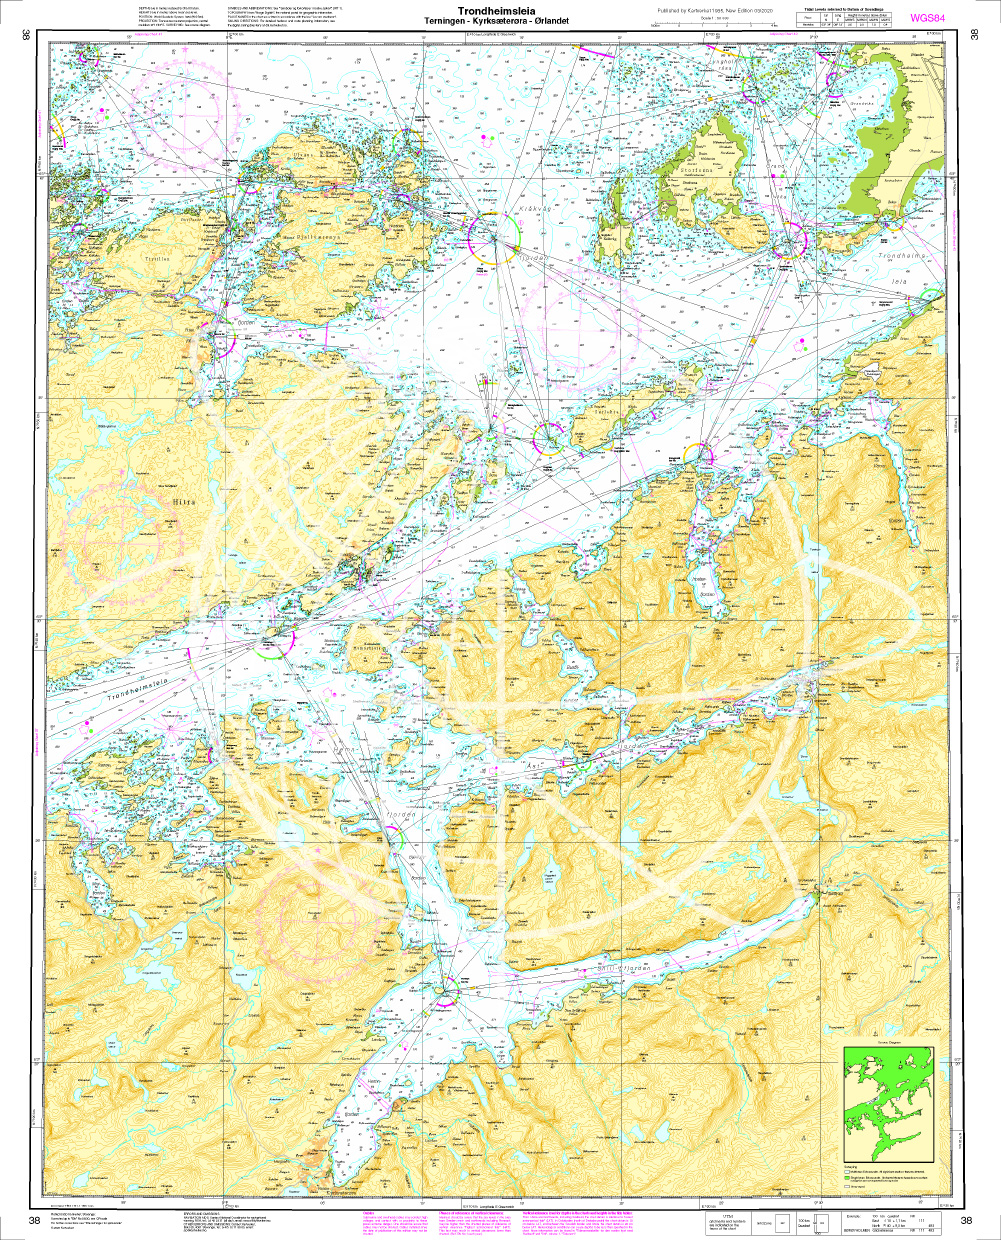 Norwegen 39 Atlantik, Trondheimsfjord mit  Agdenes - Thamshamn - Buvika